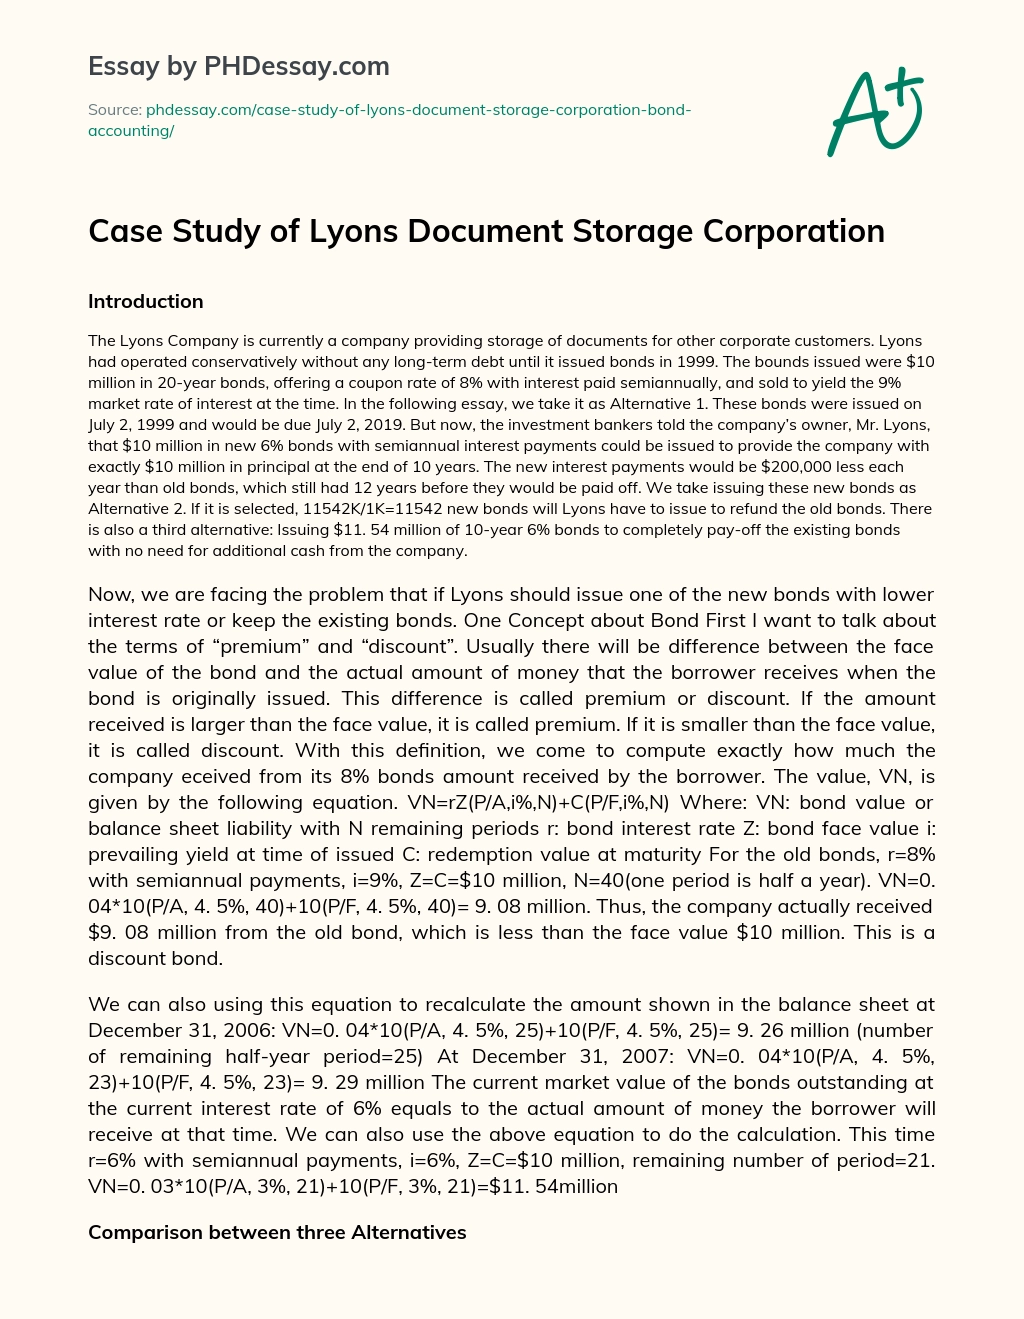 Case Study of Lyons Document Storage Corporation essay